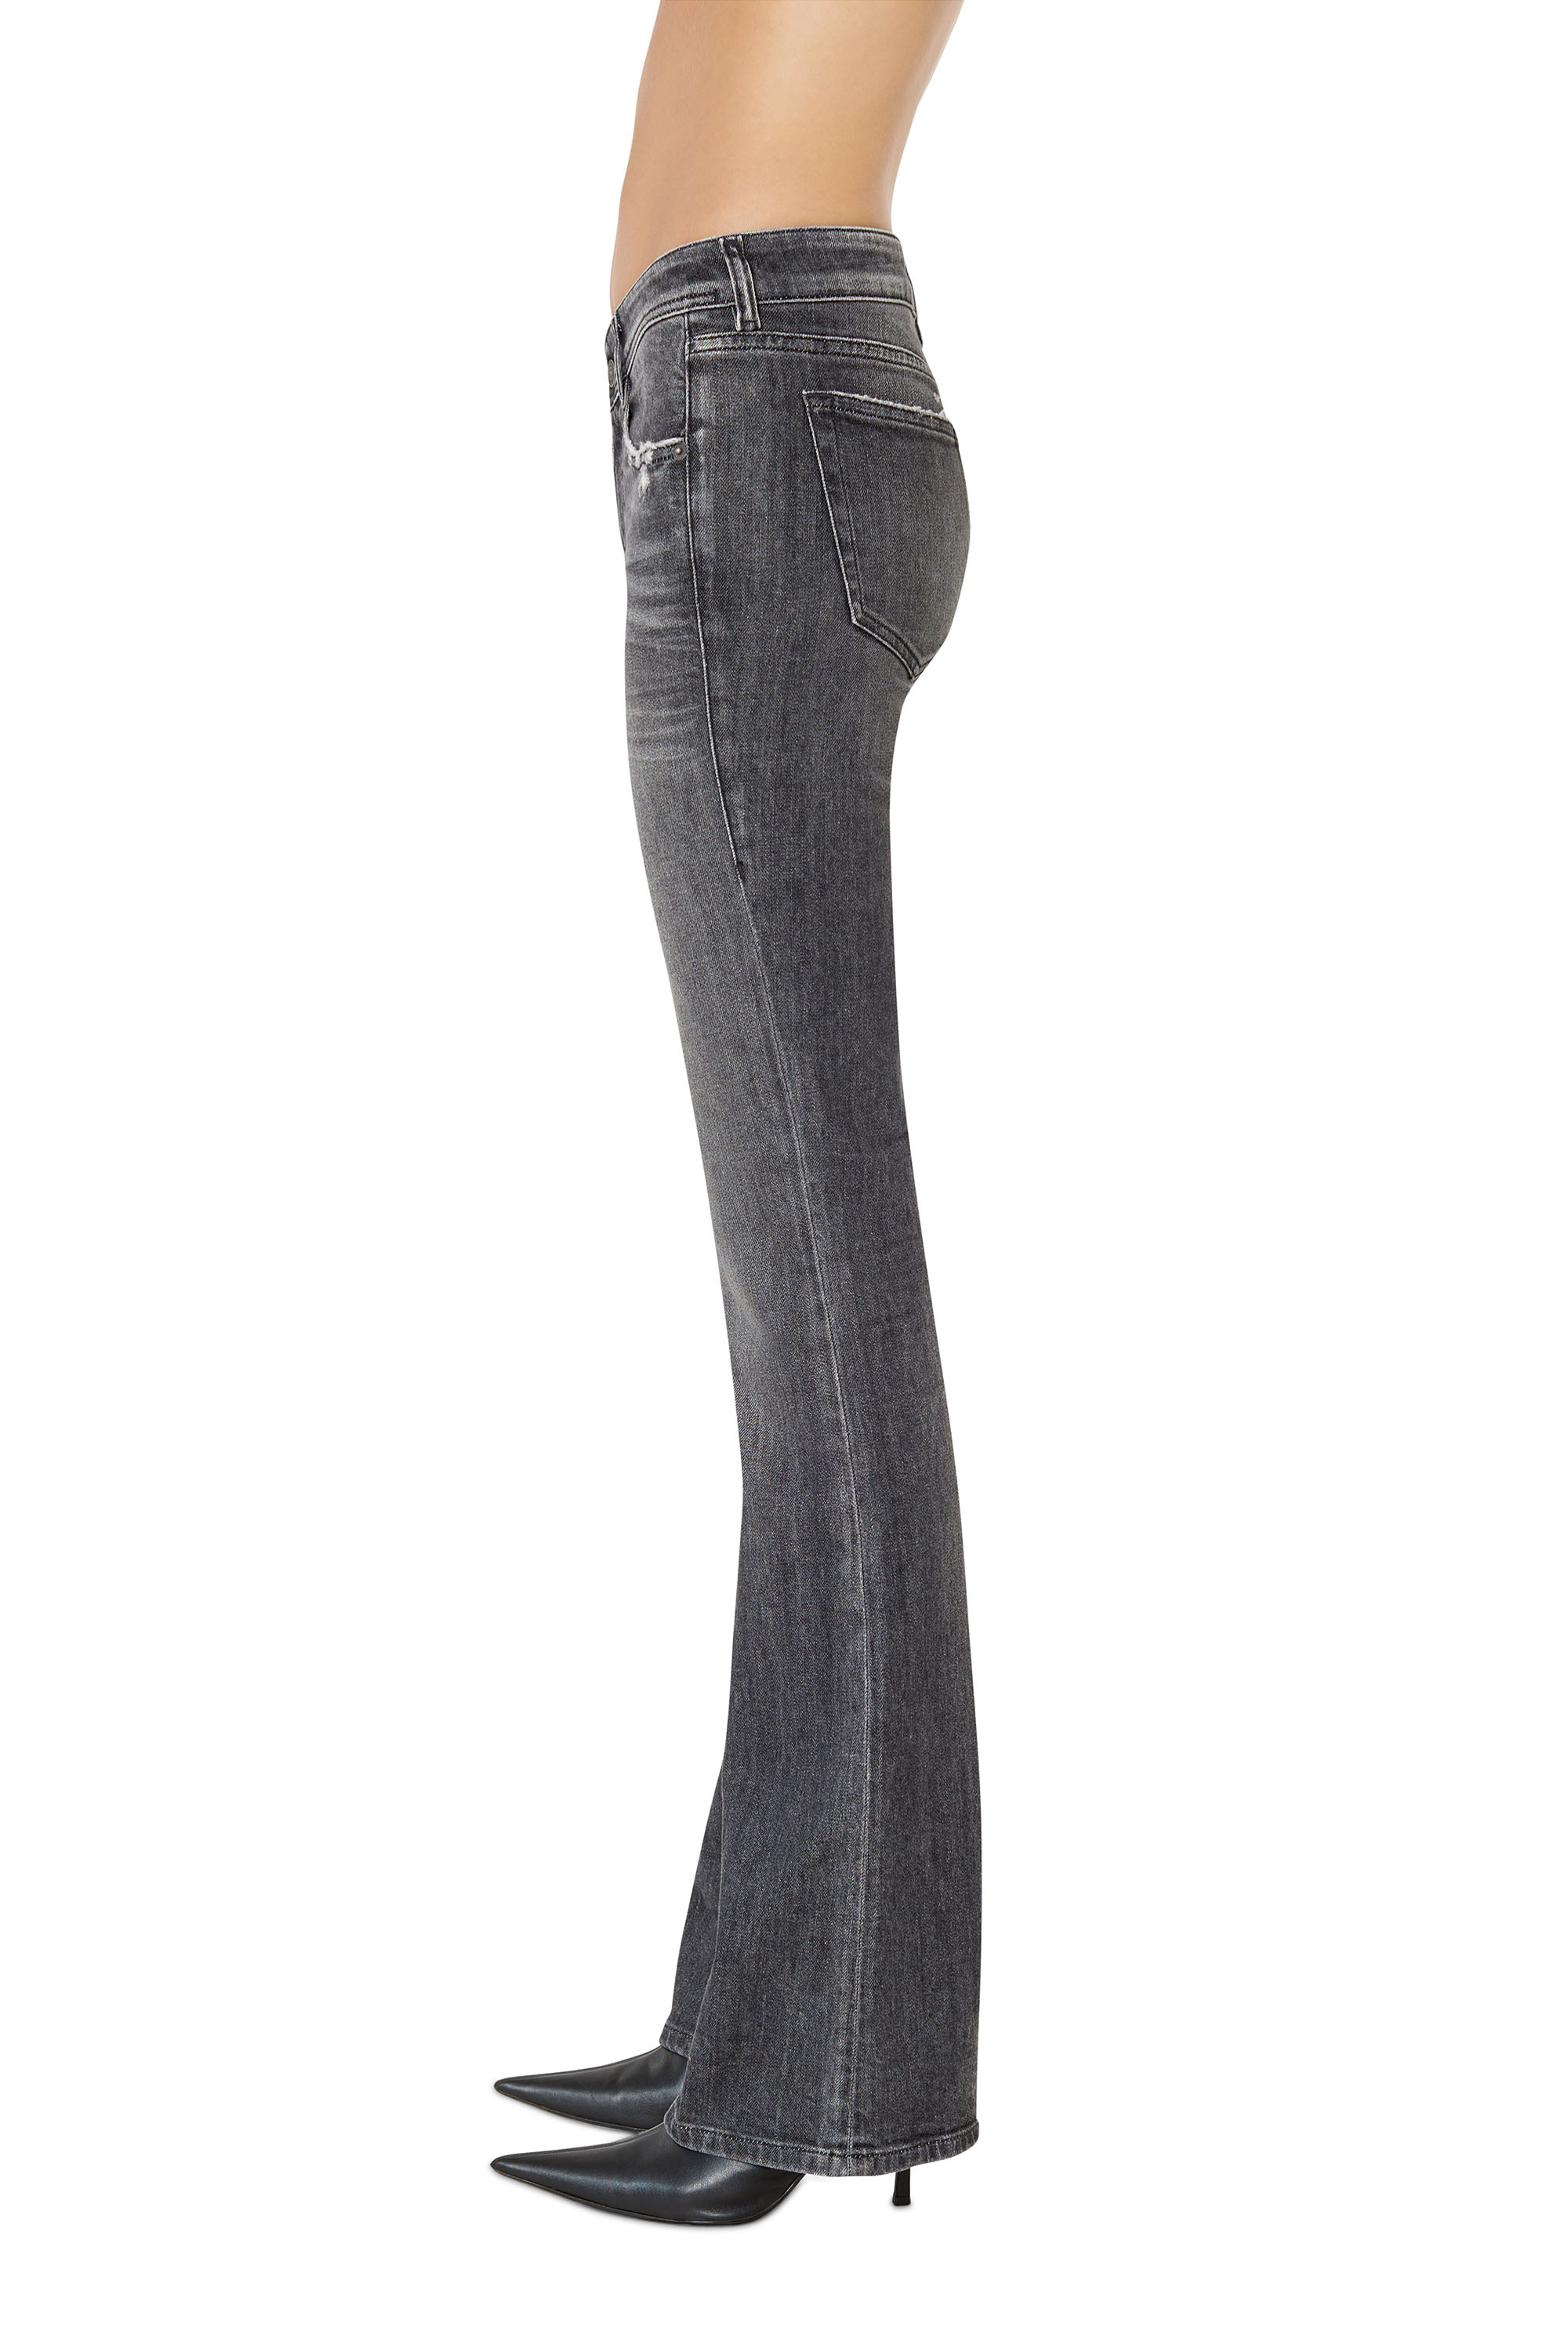 Damen Bekleidung Jeans Röhrenjeans DIESEL Denim Andere materialien jeans in Schwarz 